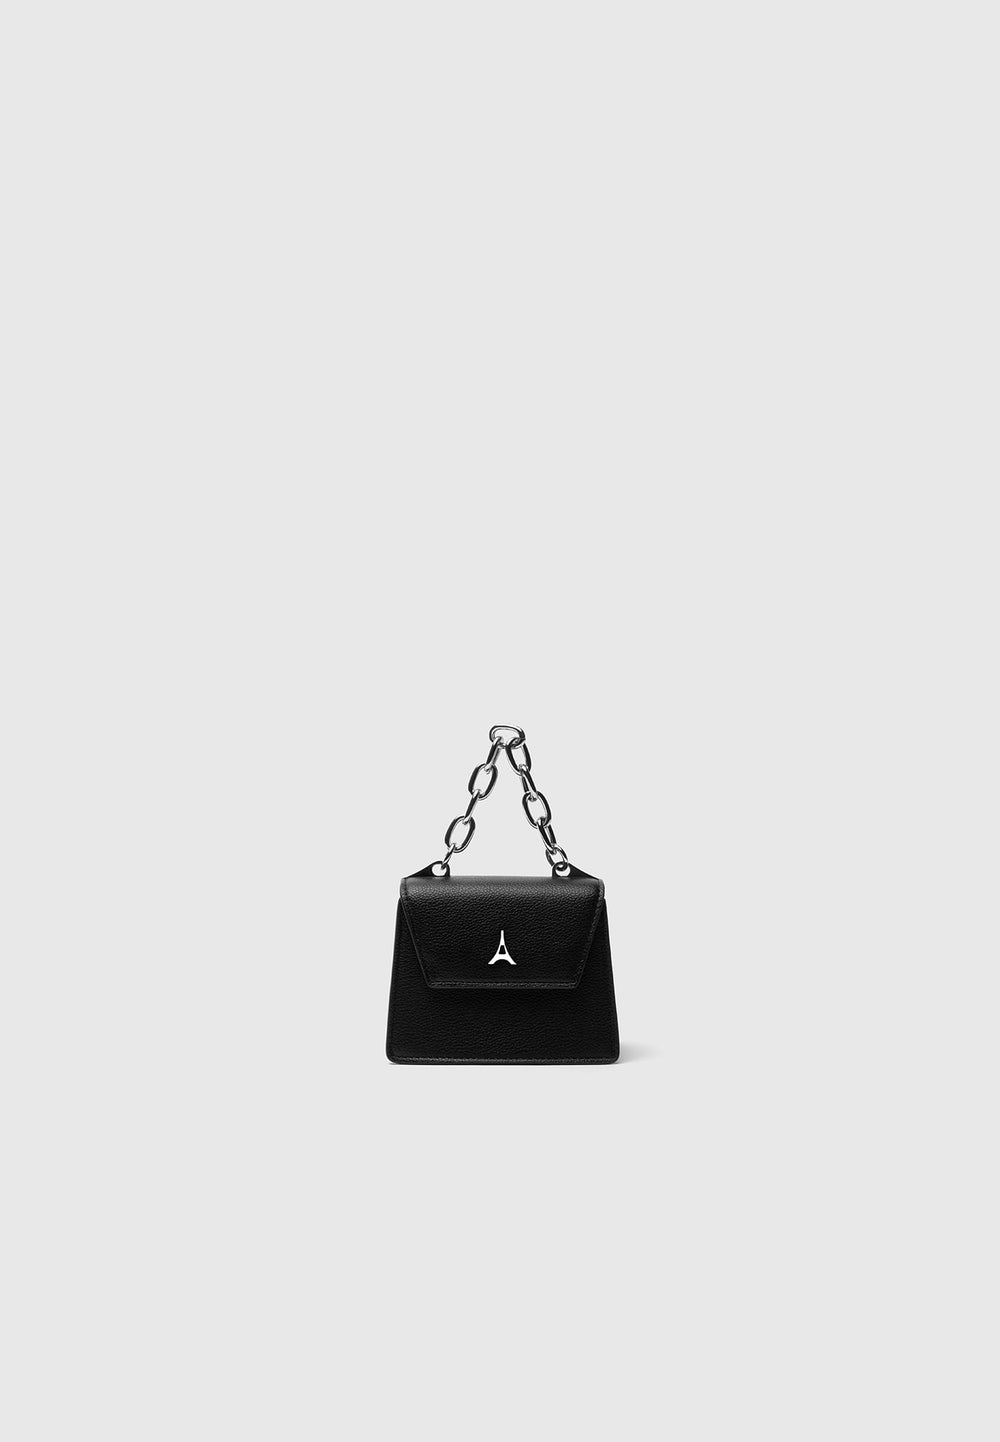 miniature-bag-black-1